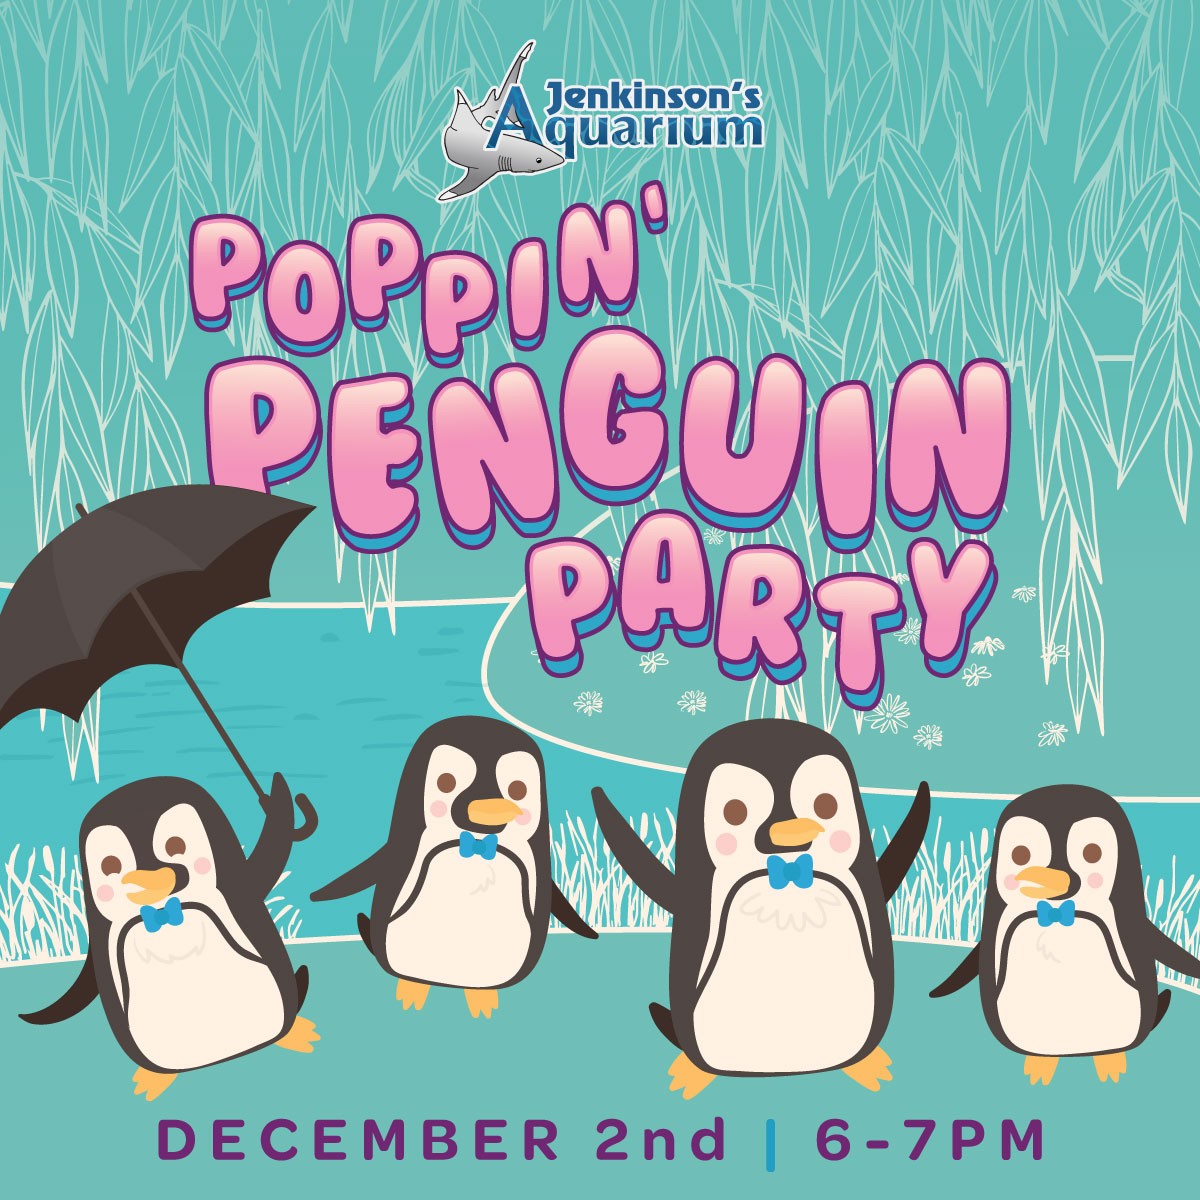 Poppin' penguin party at jenkinson's aquarium